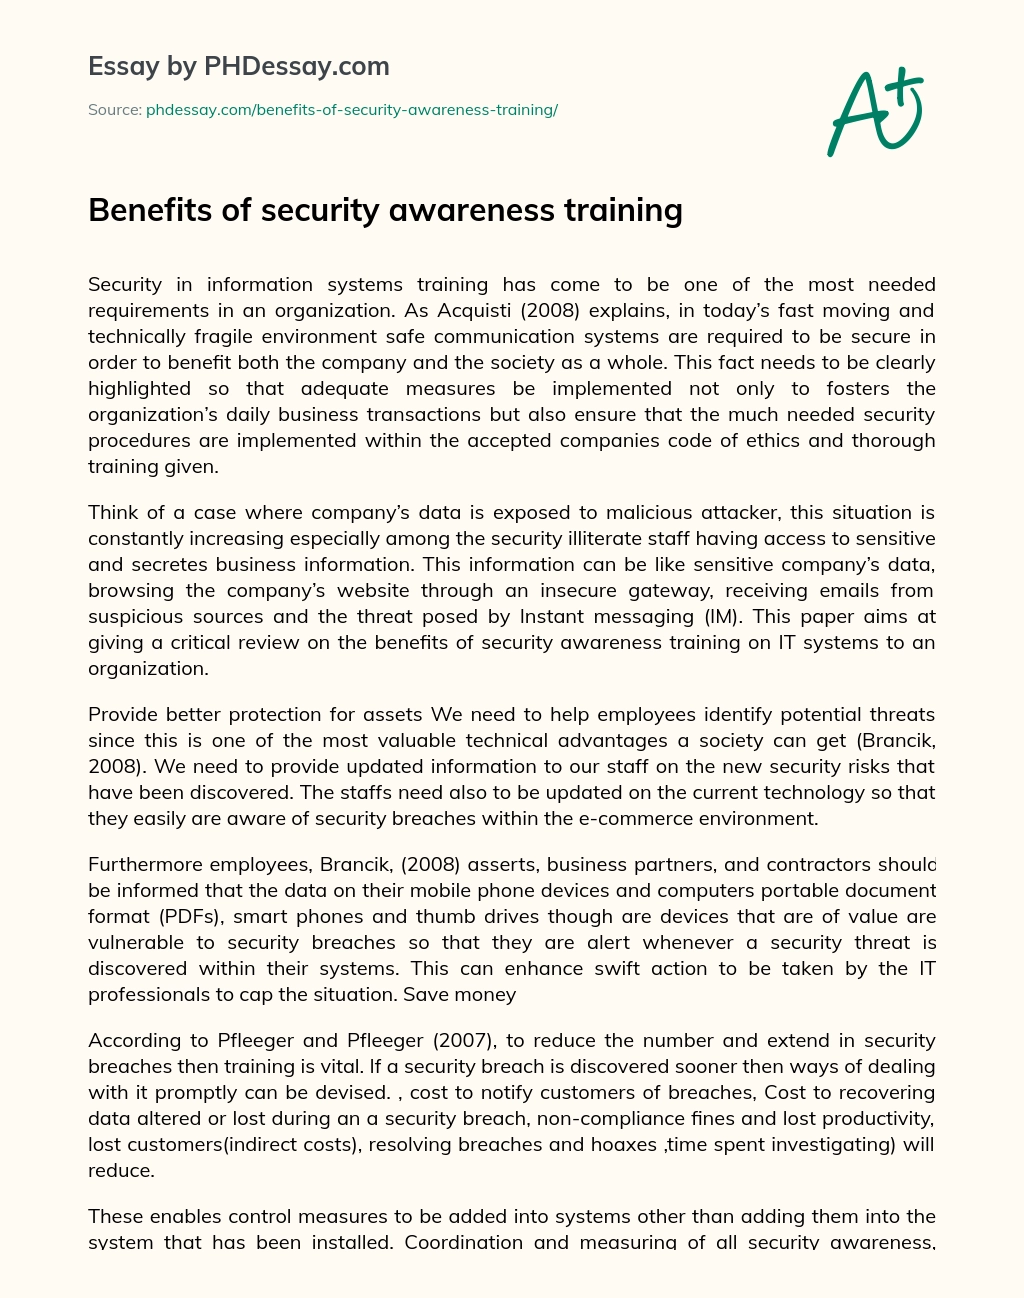 Benefits of security awareness training essay